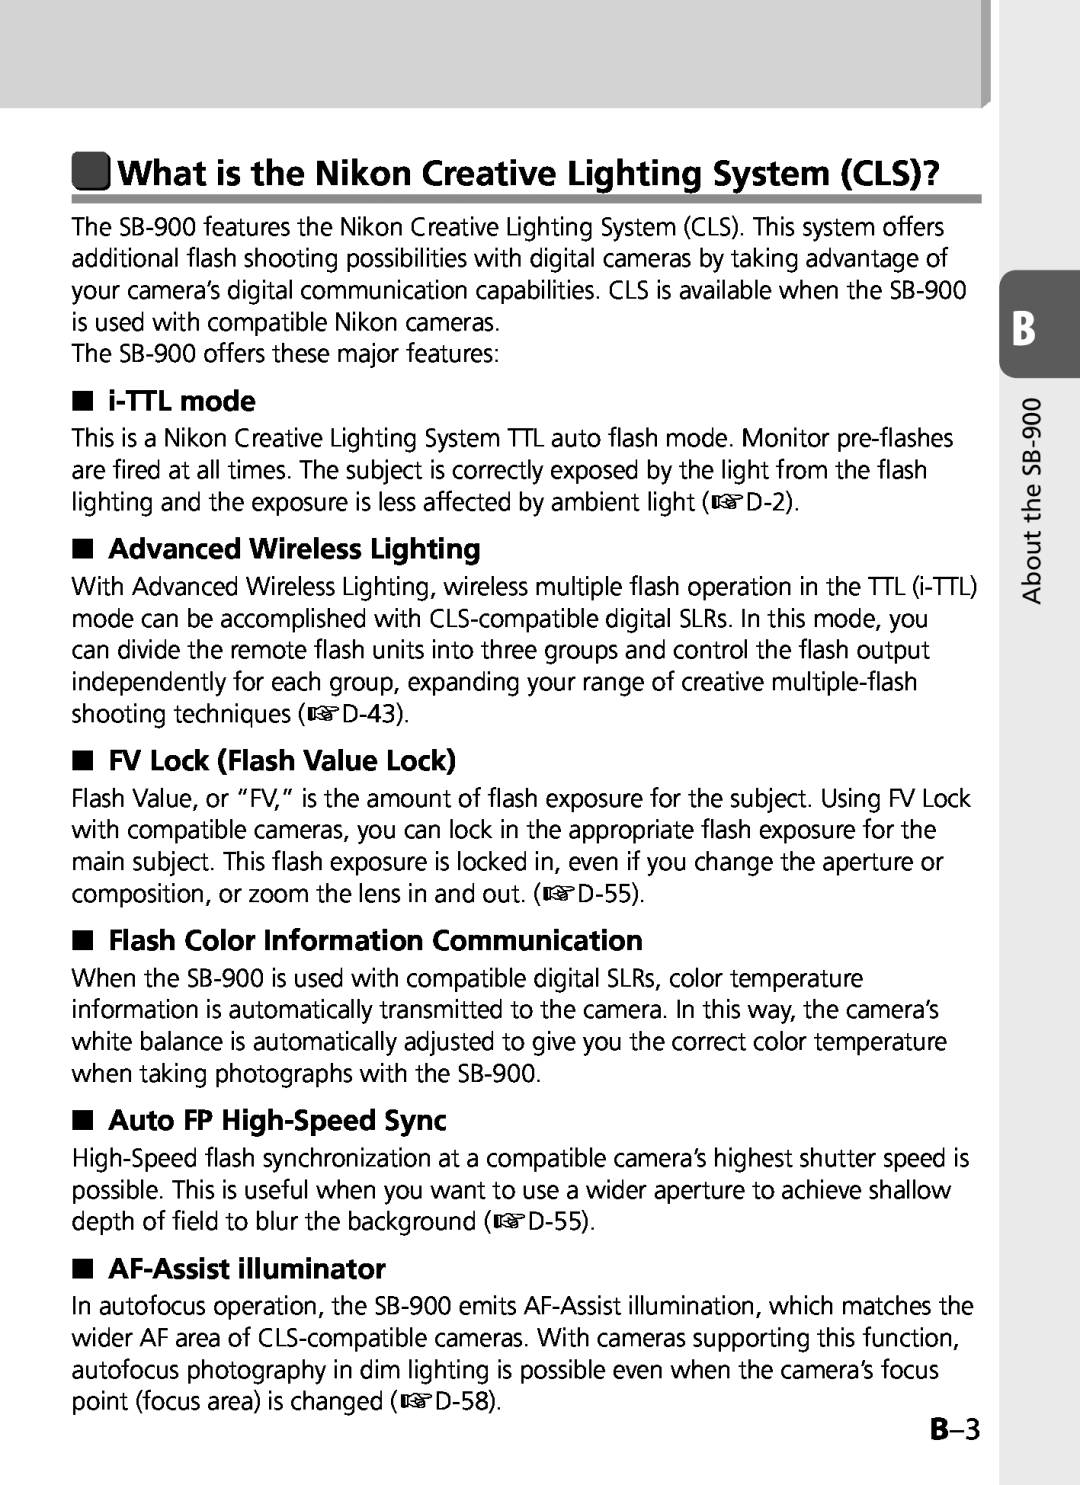 Univex SB-900 What is the Nikon Creative Lighting System CLS?, i-TTLmode, Advanced Wireless Lighting, AF-Assistilluminator 